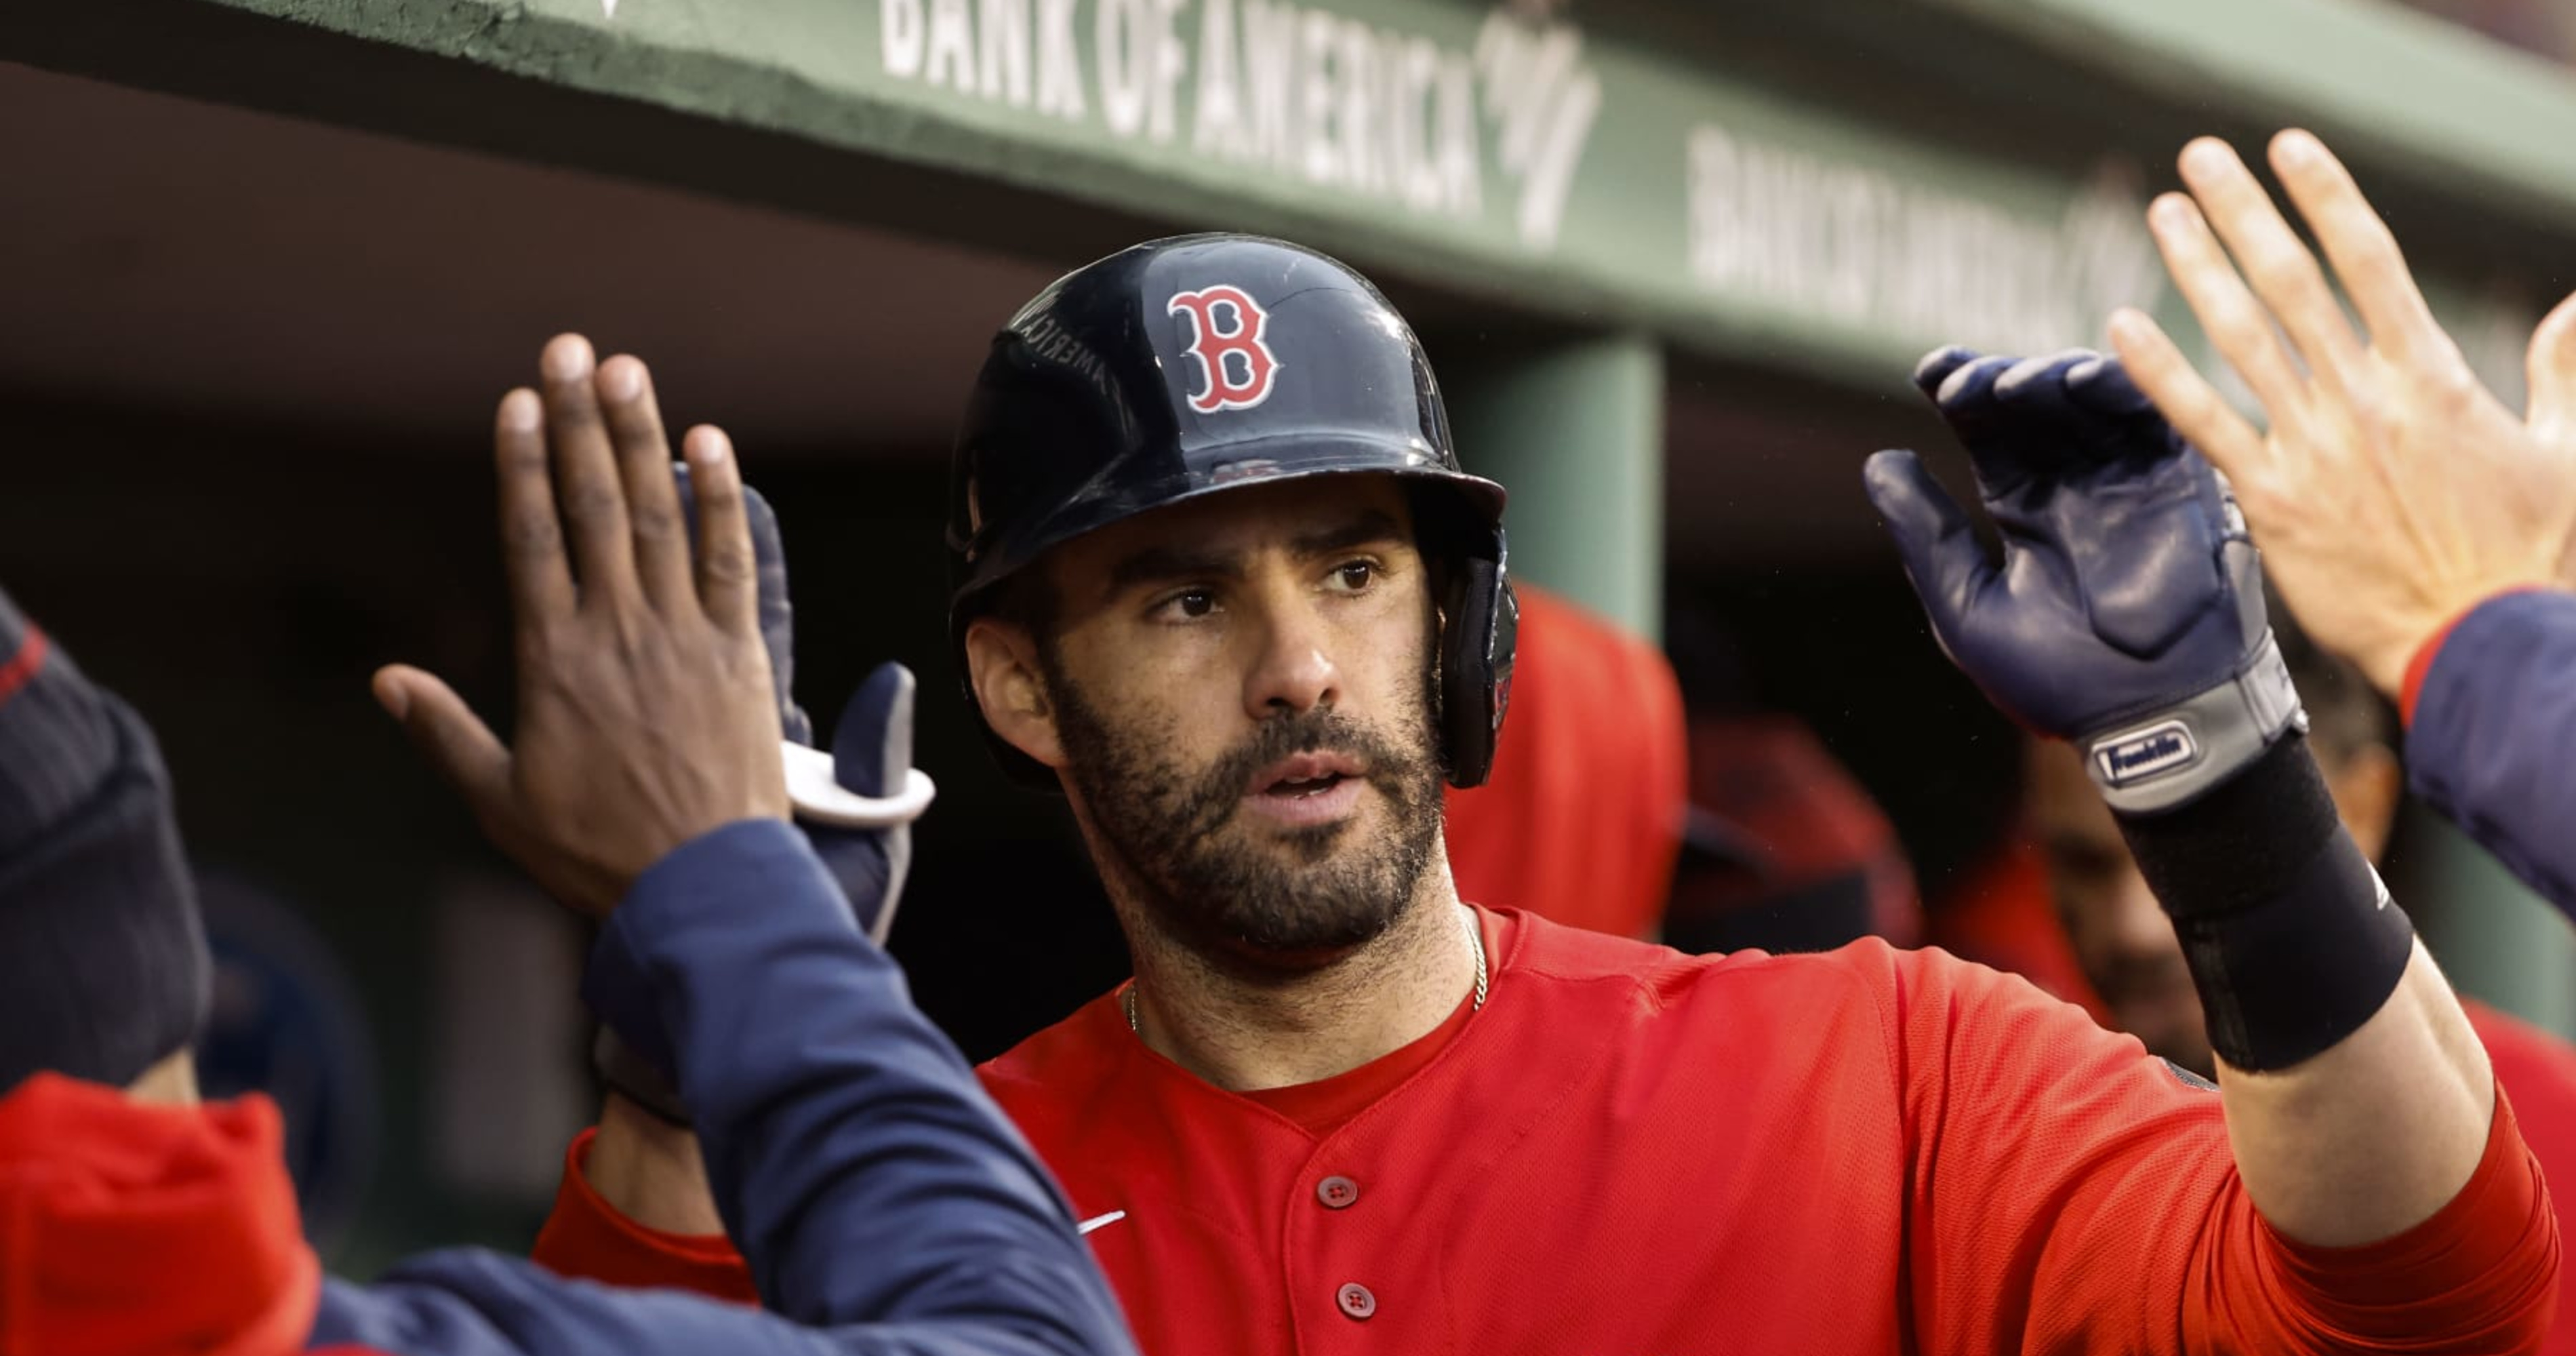 FOX Sports: MLB on X: JD Martinez is RAKING this season 🔥 https